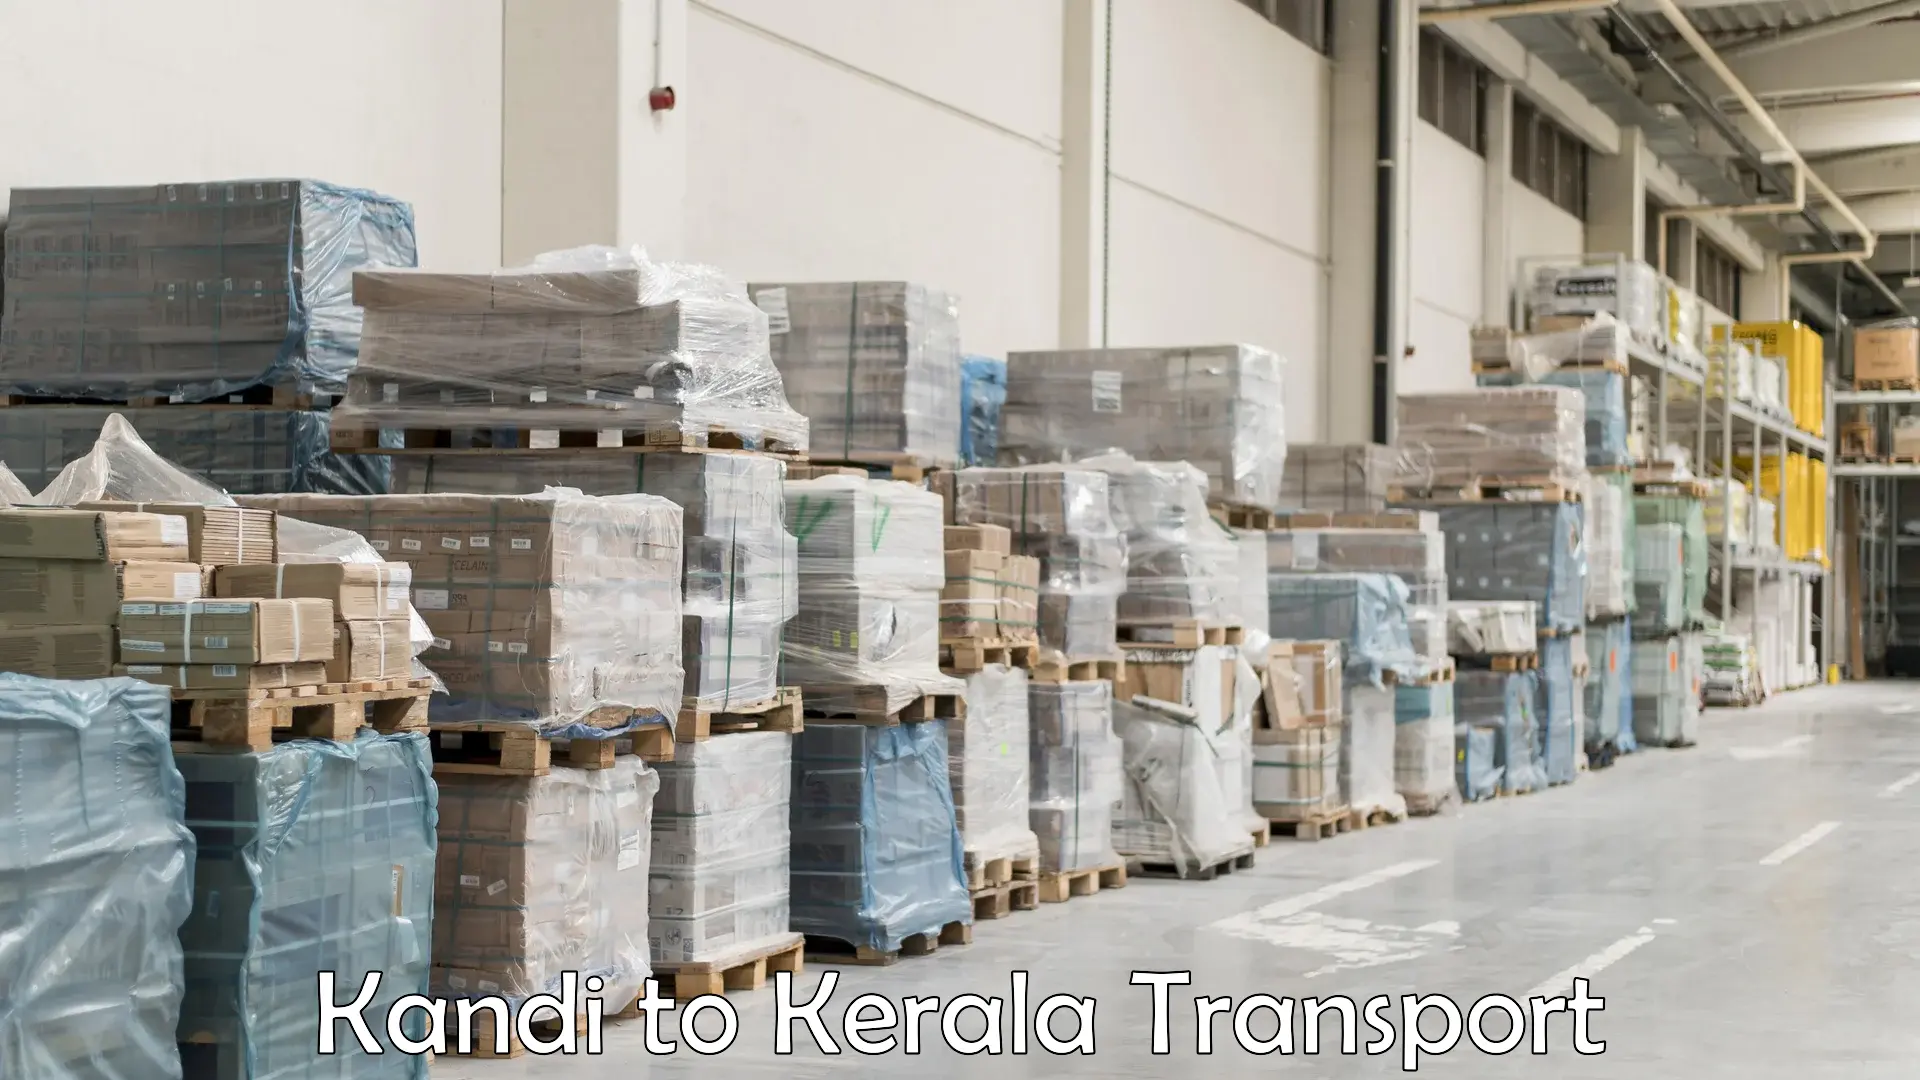 Transport in sharing Kandi to Kottayam